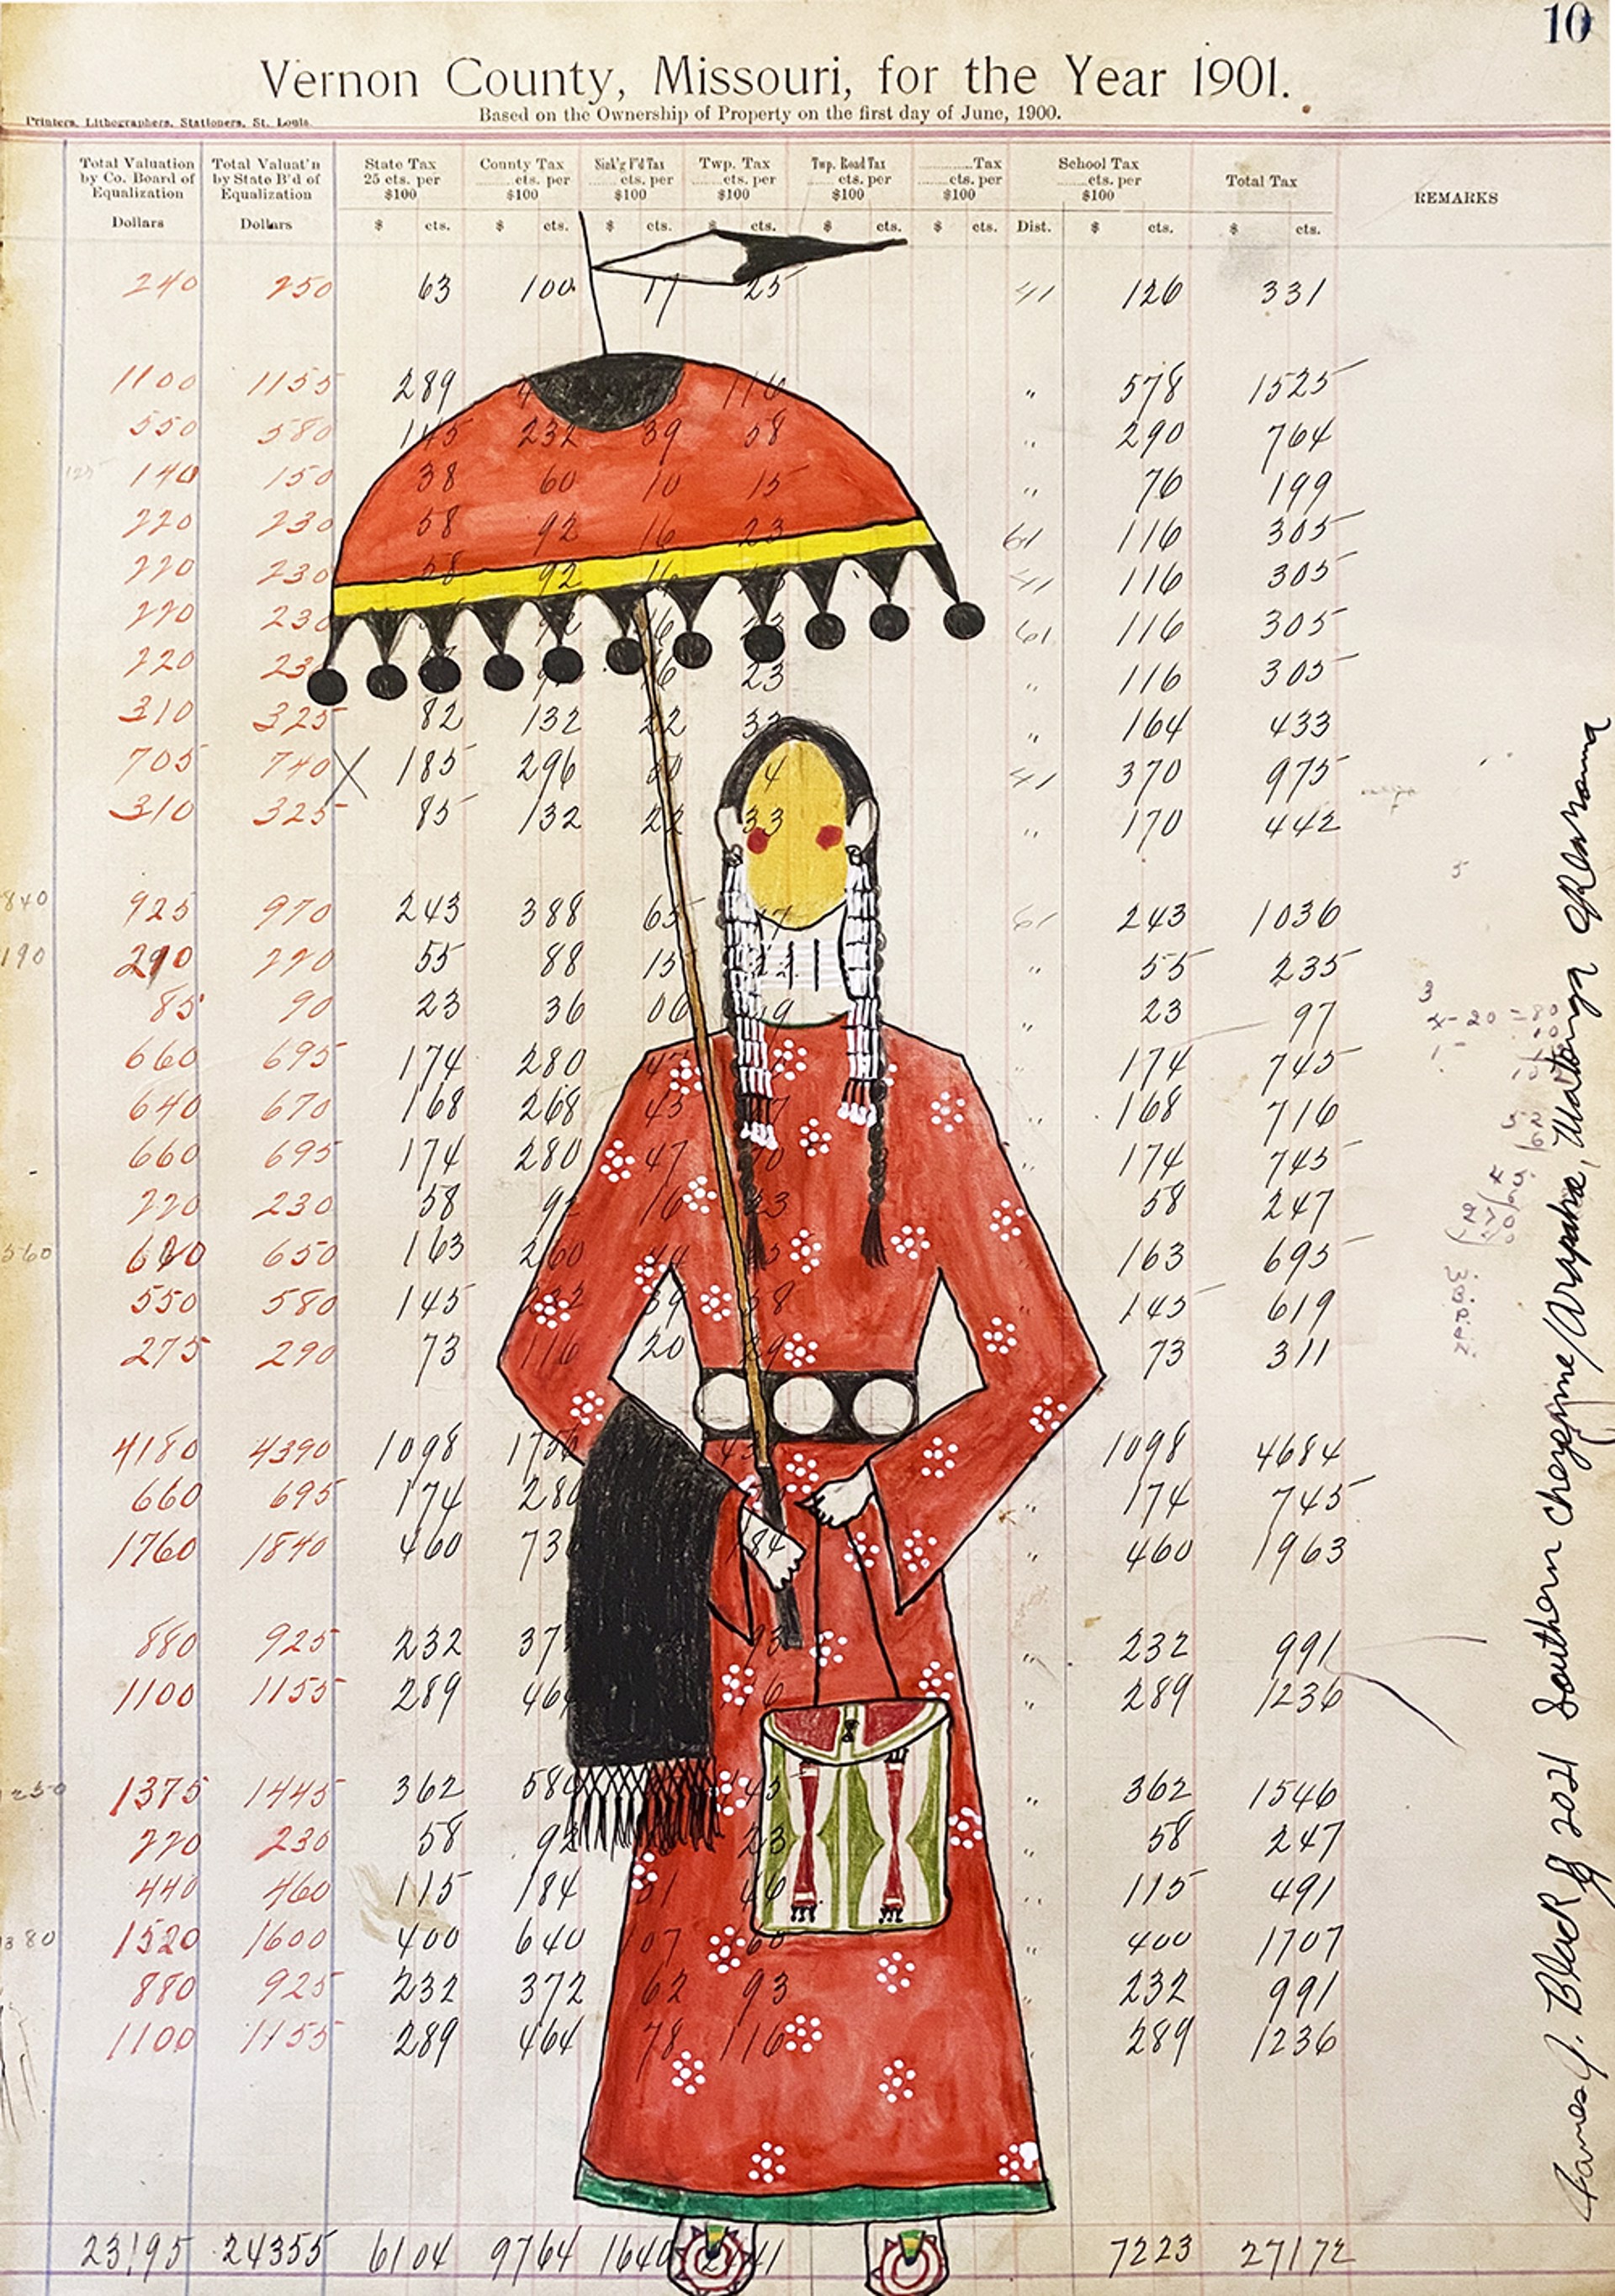 Arapaho Woman by James Black